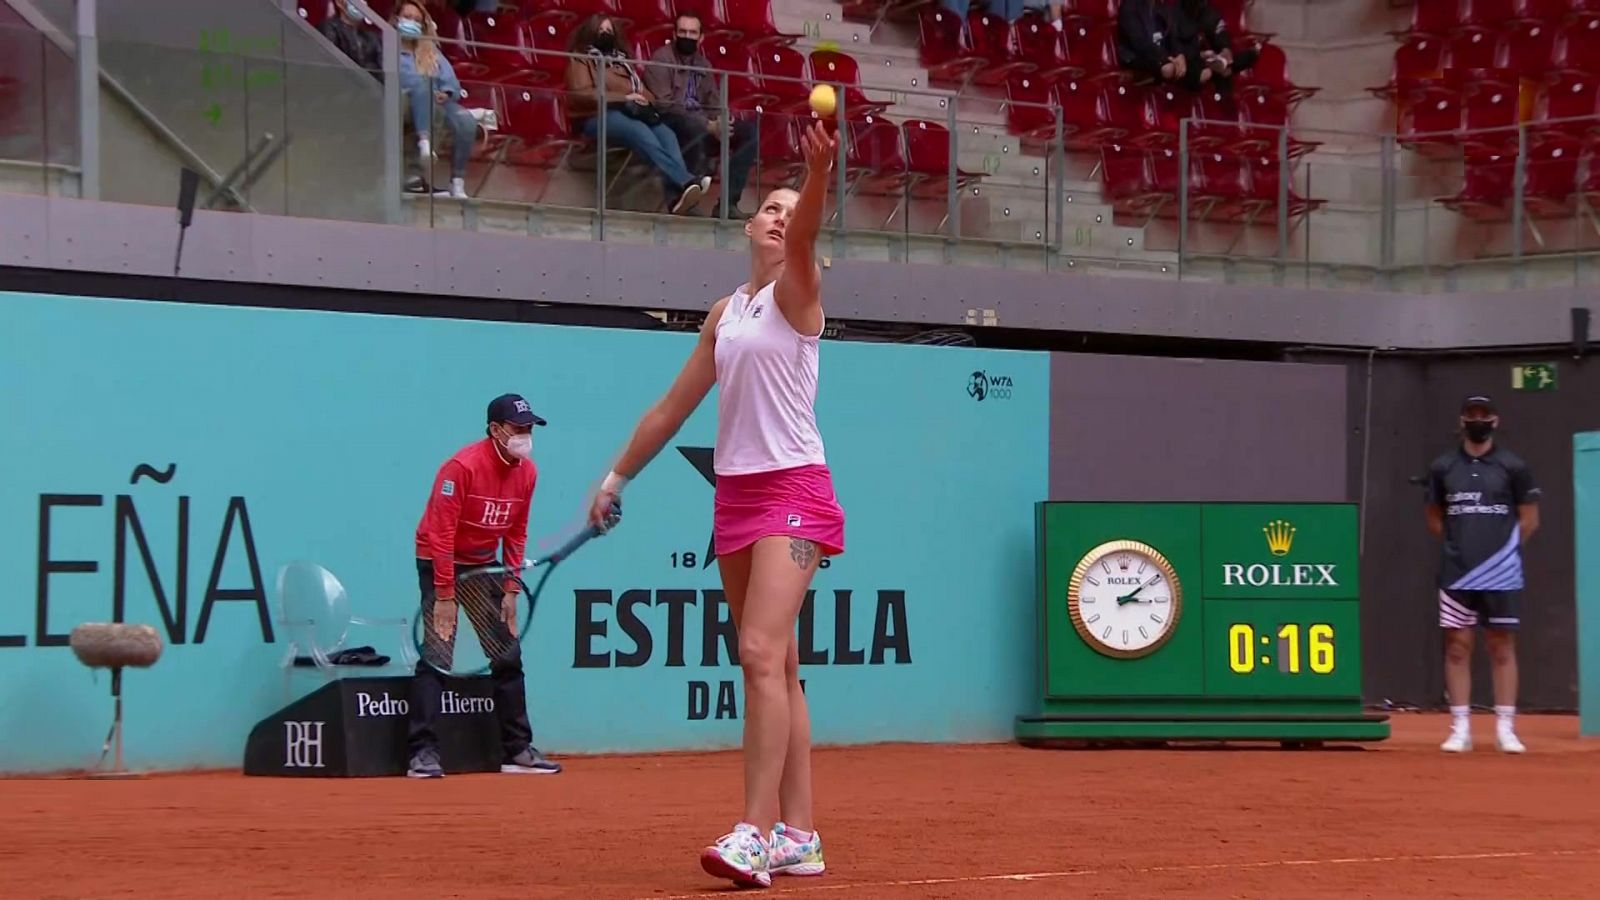 Tenis - WTA Mutua Madrid Open.: K. Pliskova - A. Pavlyuchenkova